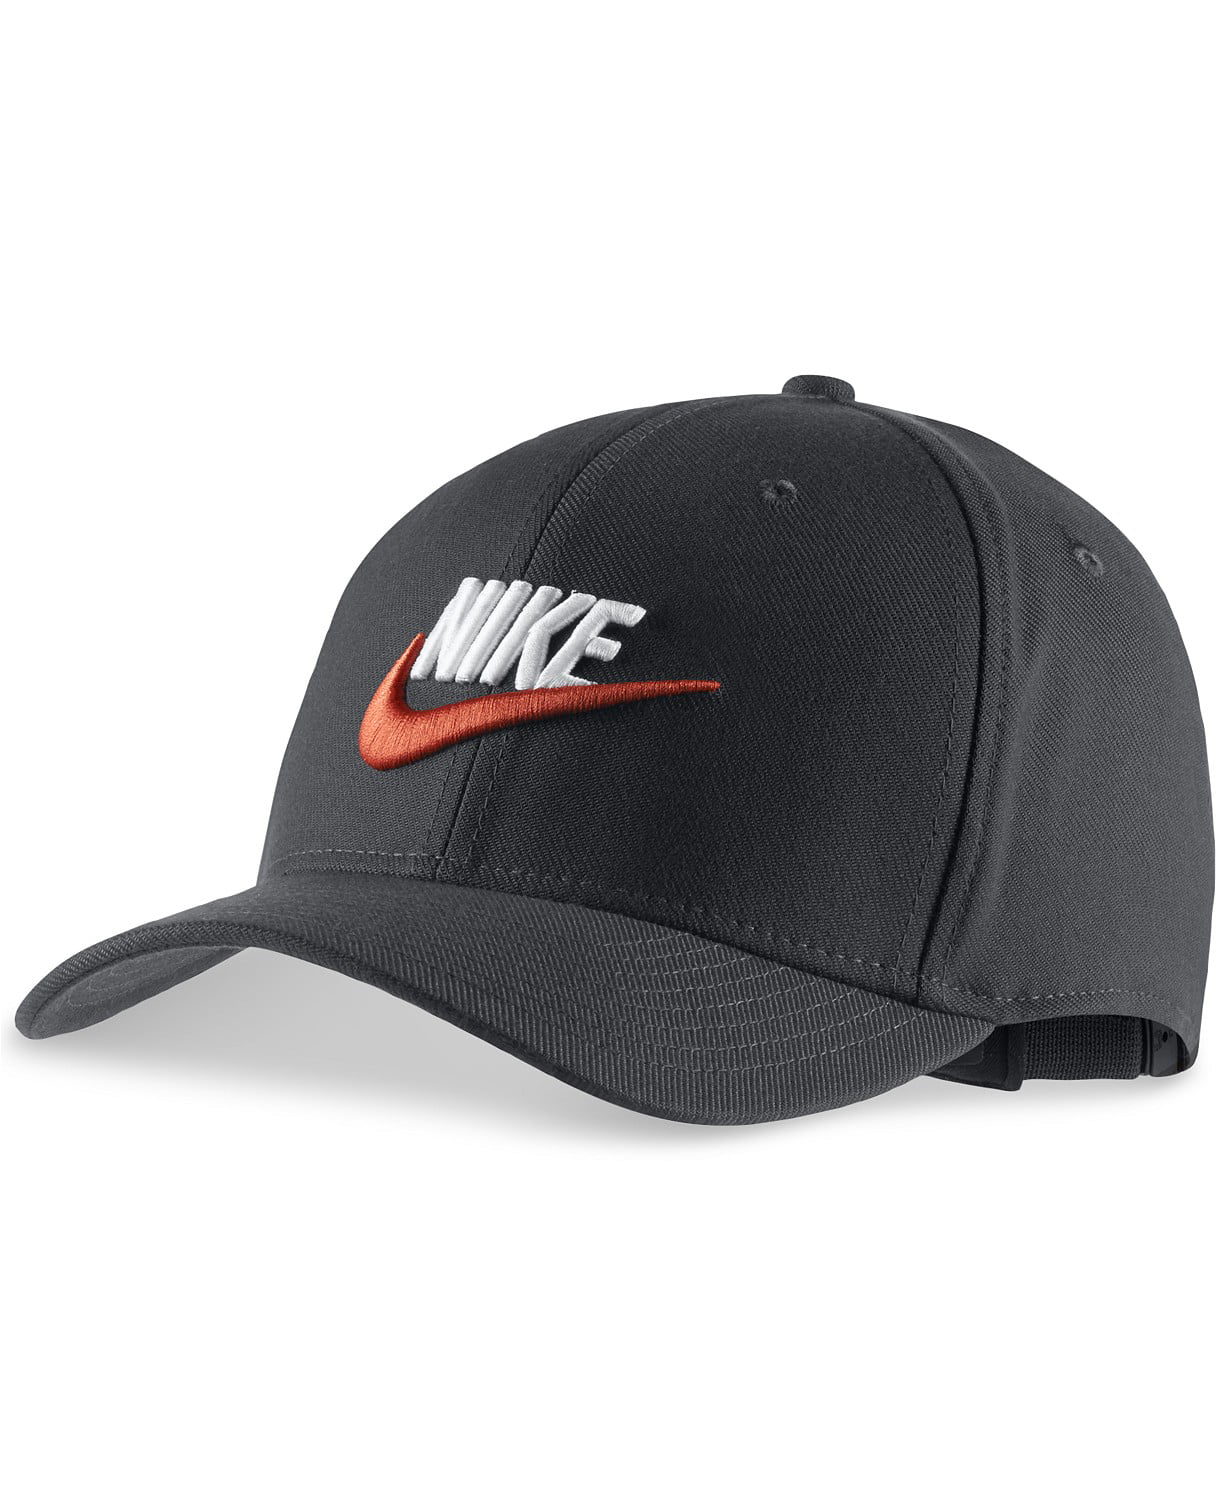 Nike - Men's Large Baseball Cap Sportswear Dri-FIT Stretch Cotton L ...